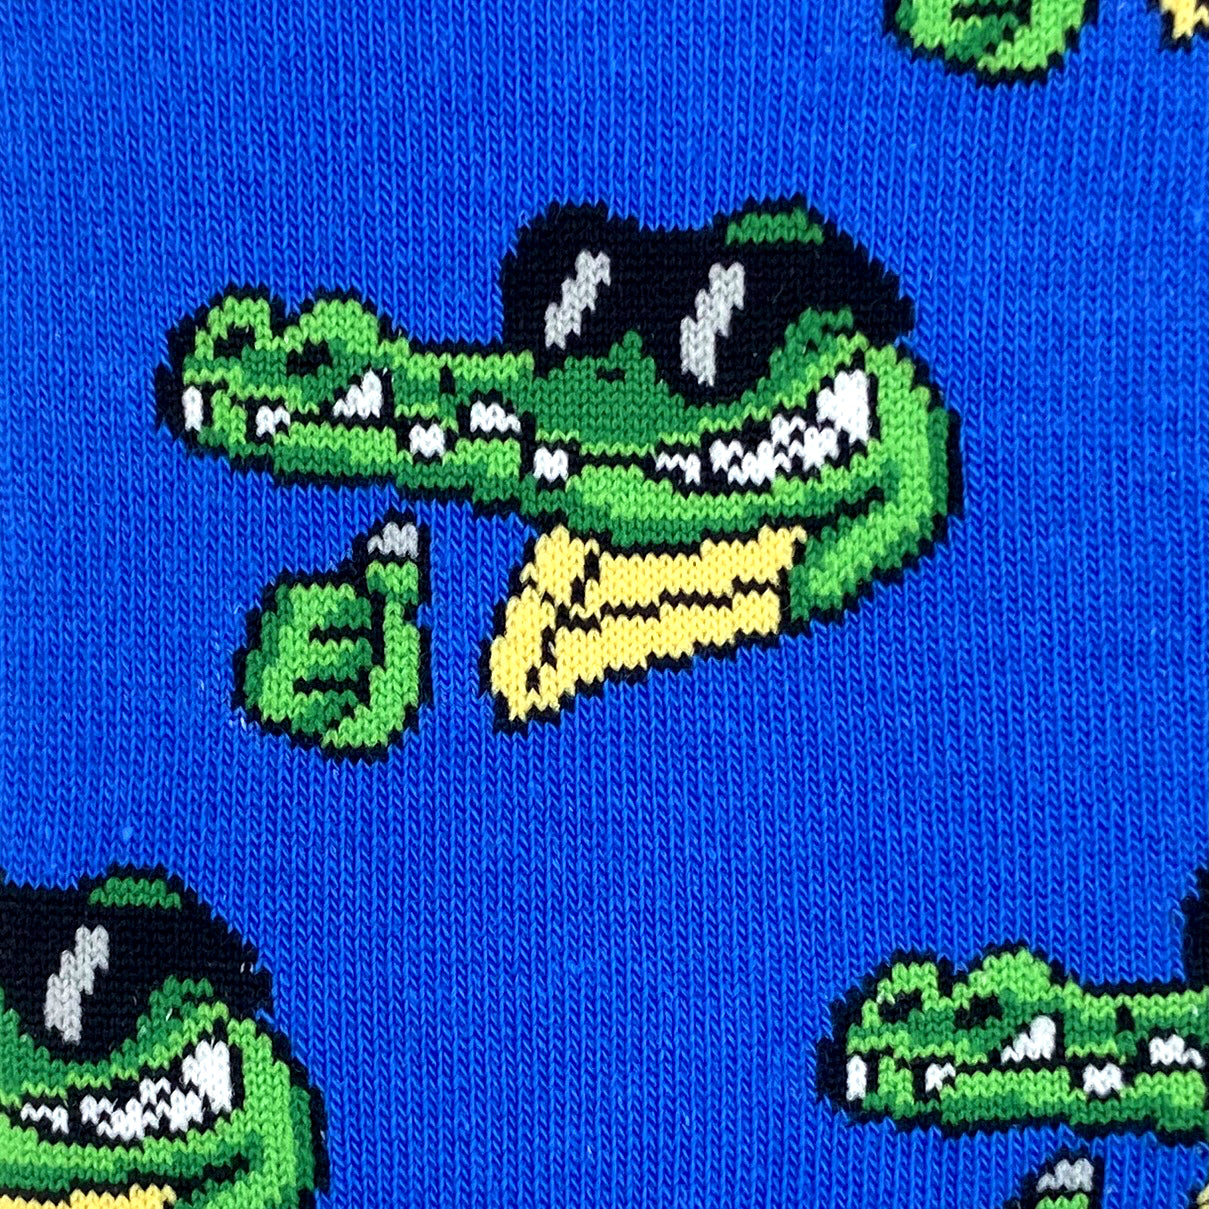 Bright Blue Cool Crocodile Alligator Reptile Patterned Novelty Socks